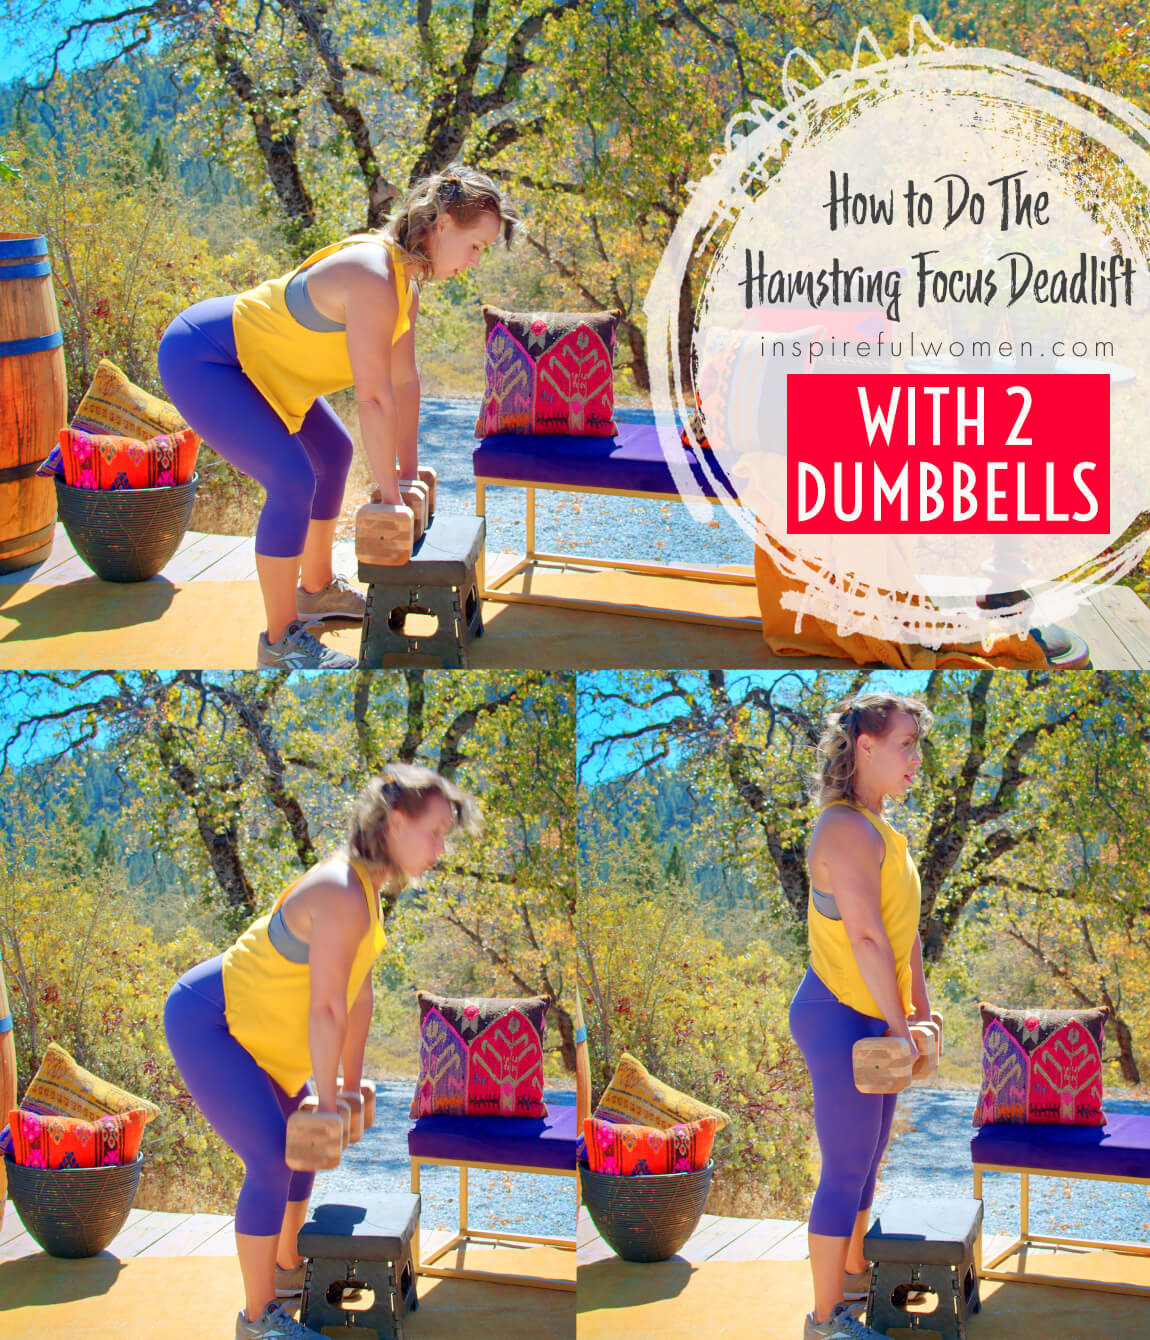 how-to-2-dumbbells-hamstring-focus-deadlift-at-home-lower-body-exercise-for-women-over-40